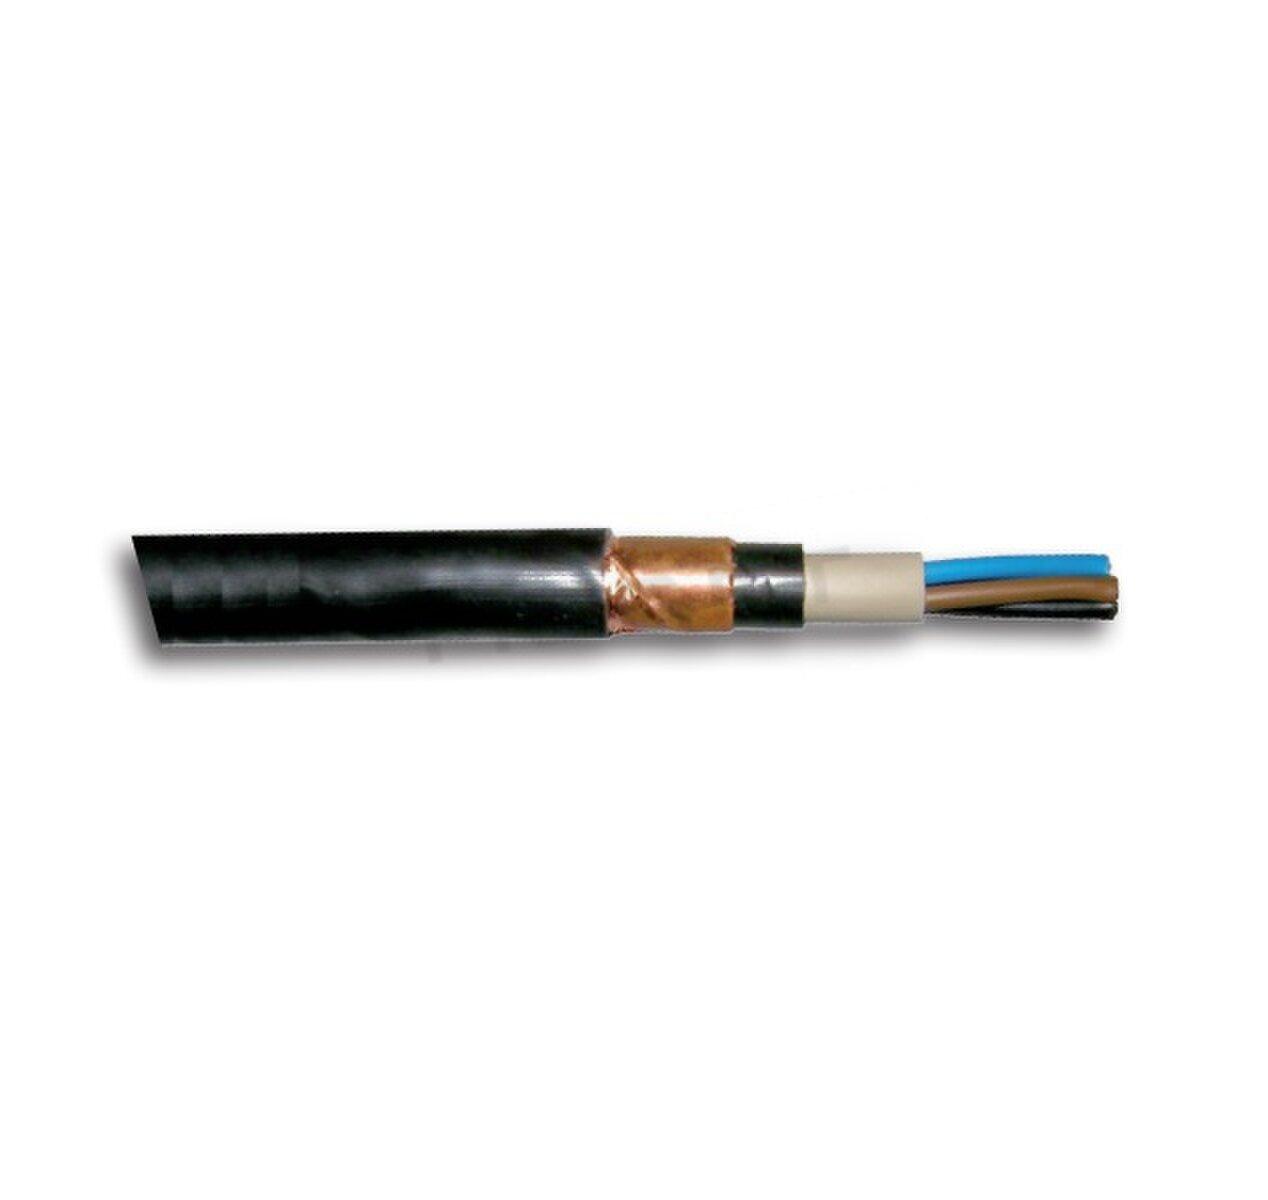 Kábel 1-CYKFY-J 7x1,5 mm2 silový